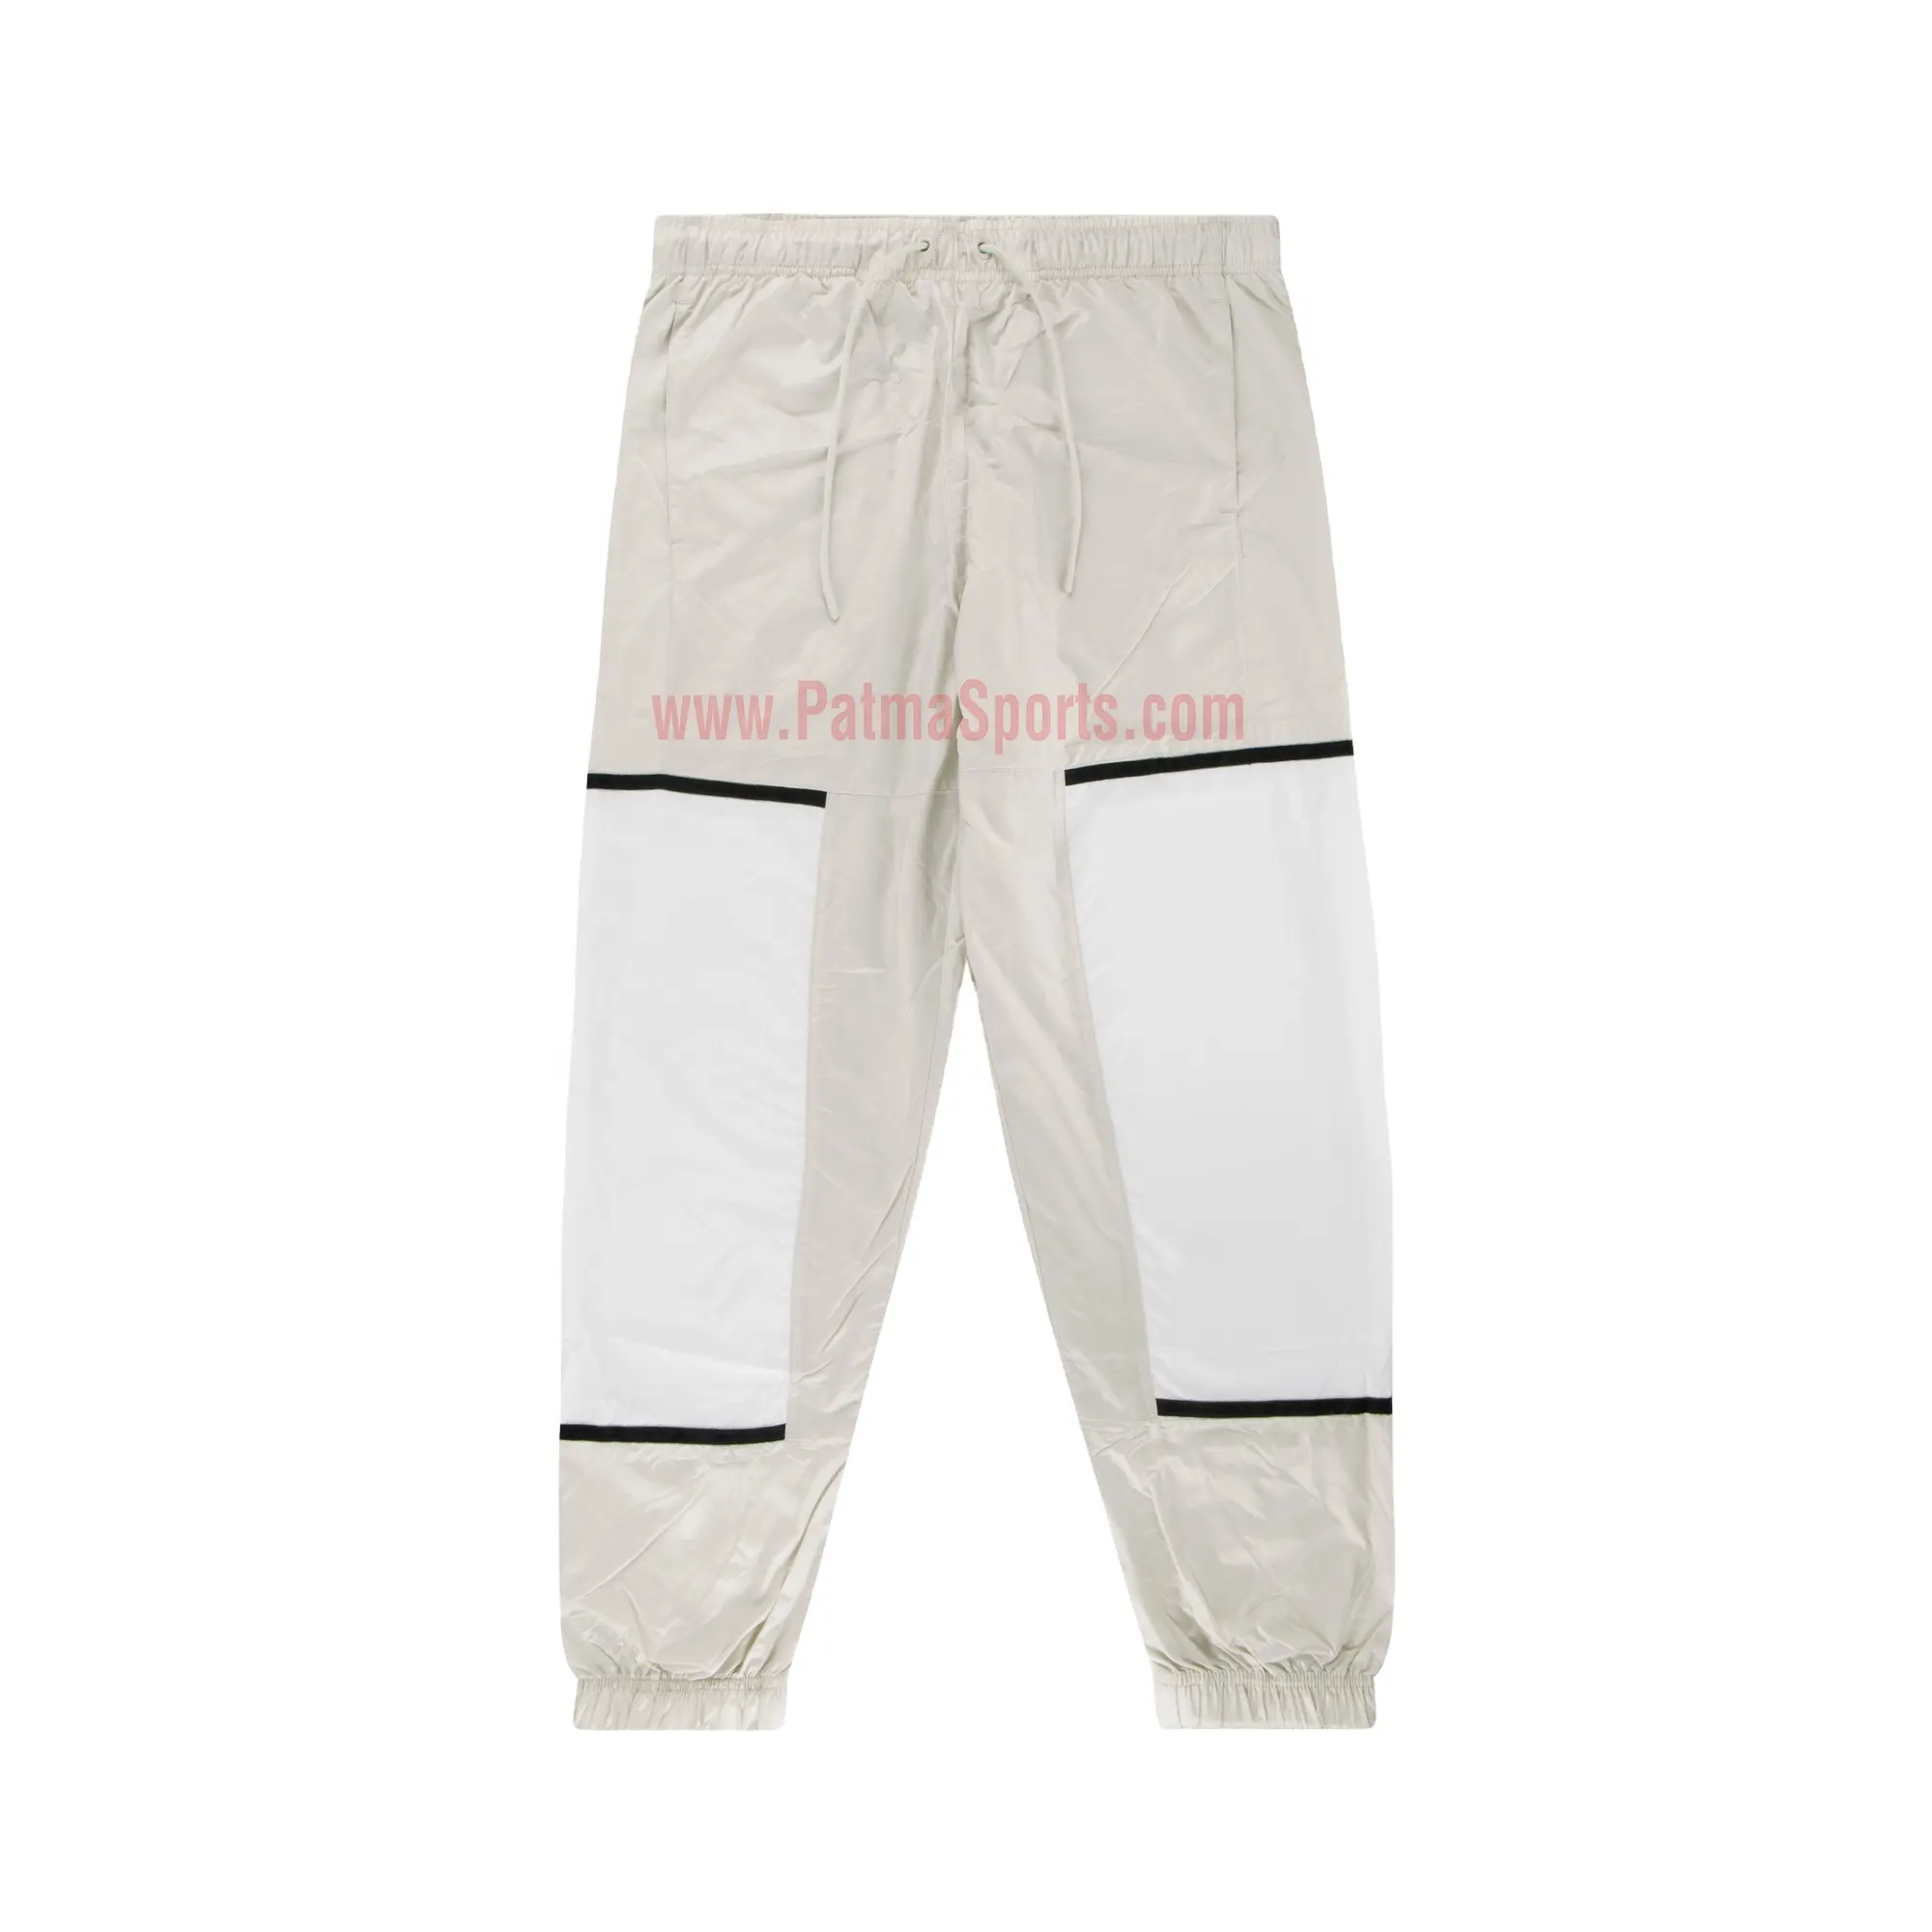 Özel rüzgarlık pantolon mevcut çok pal renk yağmur pantolon % 100% naylon Polyester tuval tipi kumaş